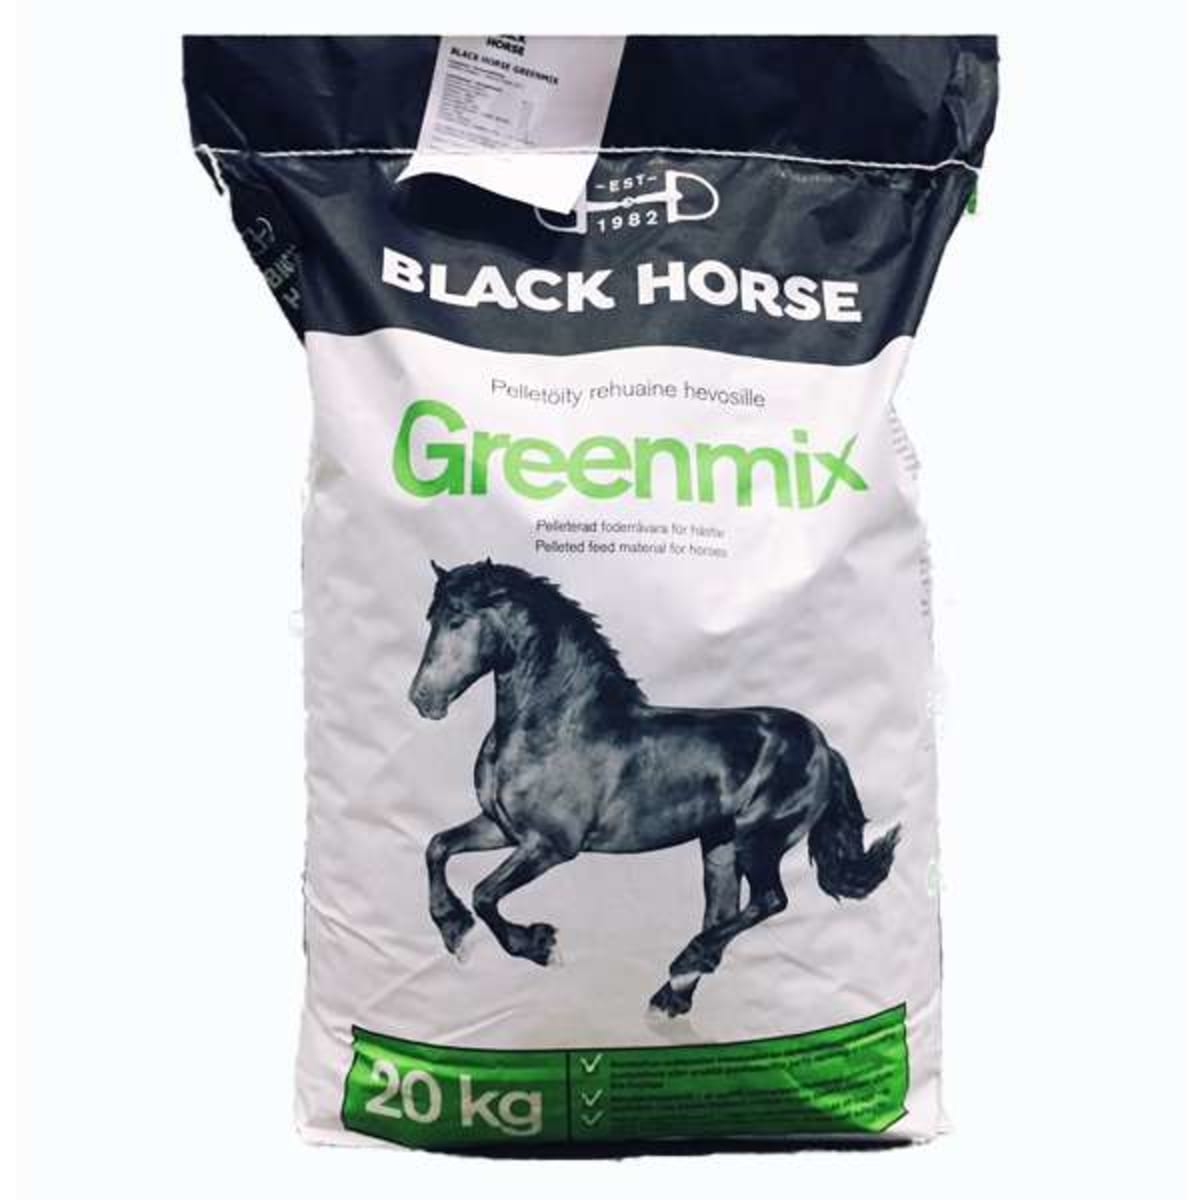 Black Horse Greenmix viherpelletti 20 kg  verkkokauppa